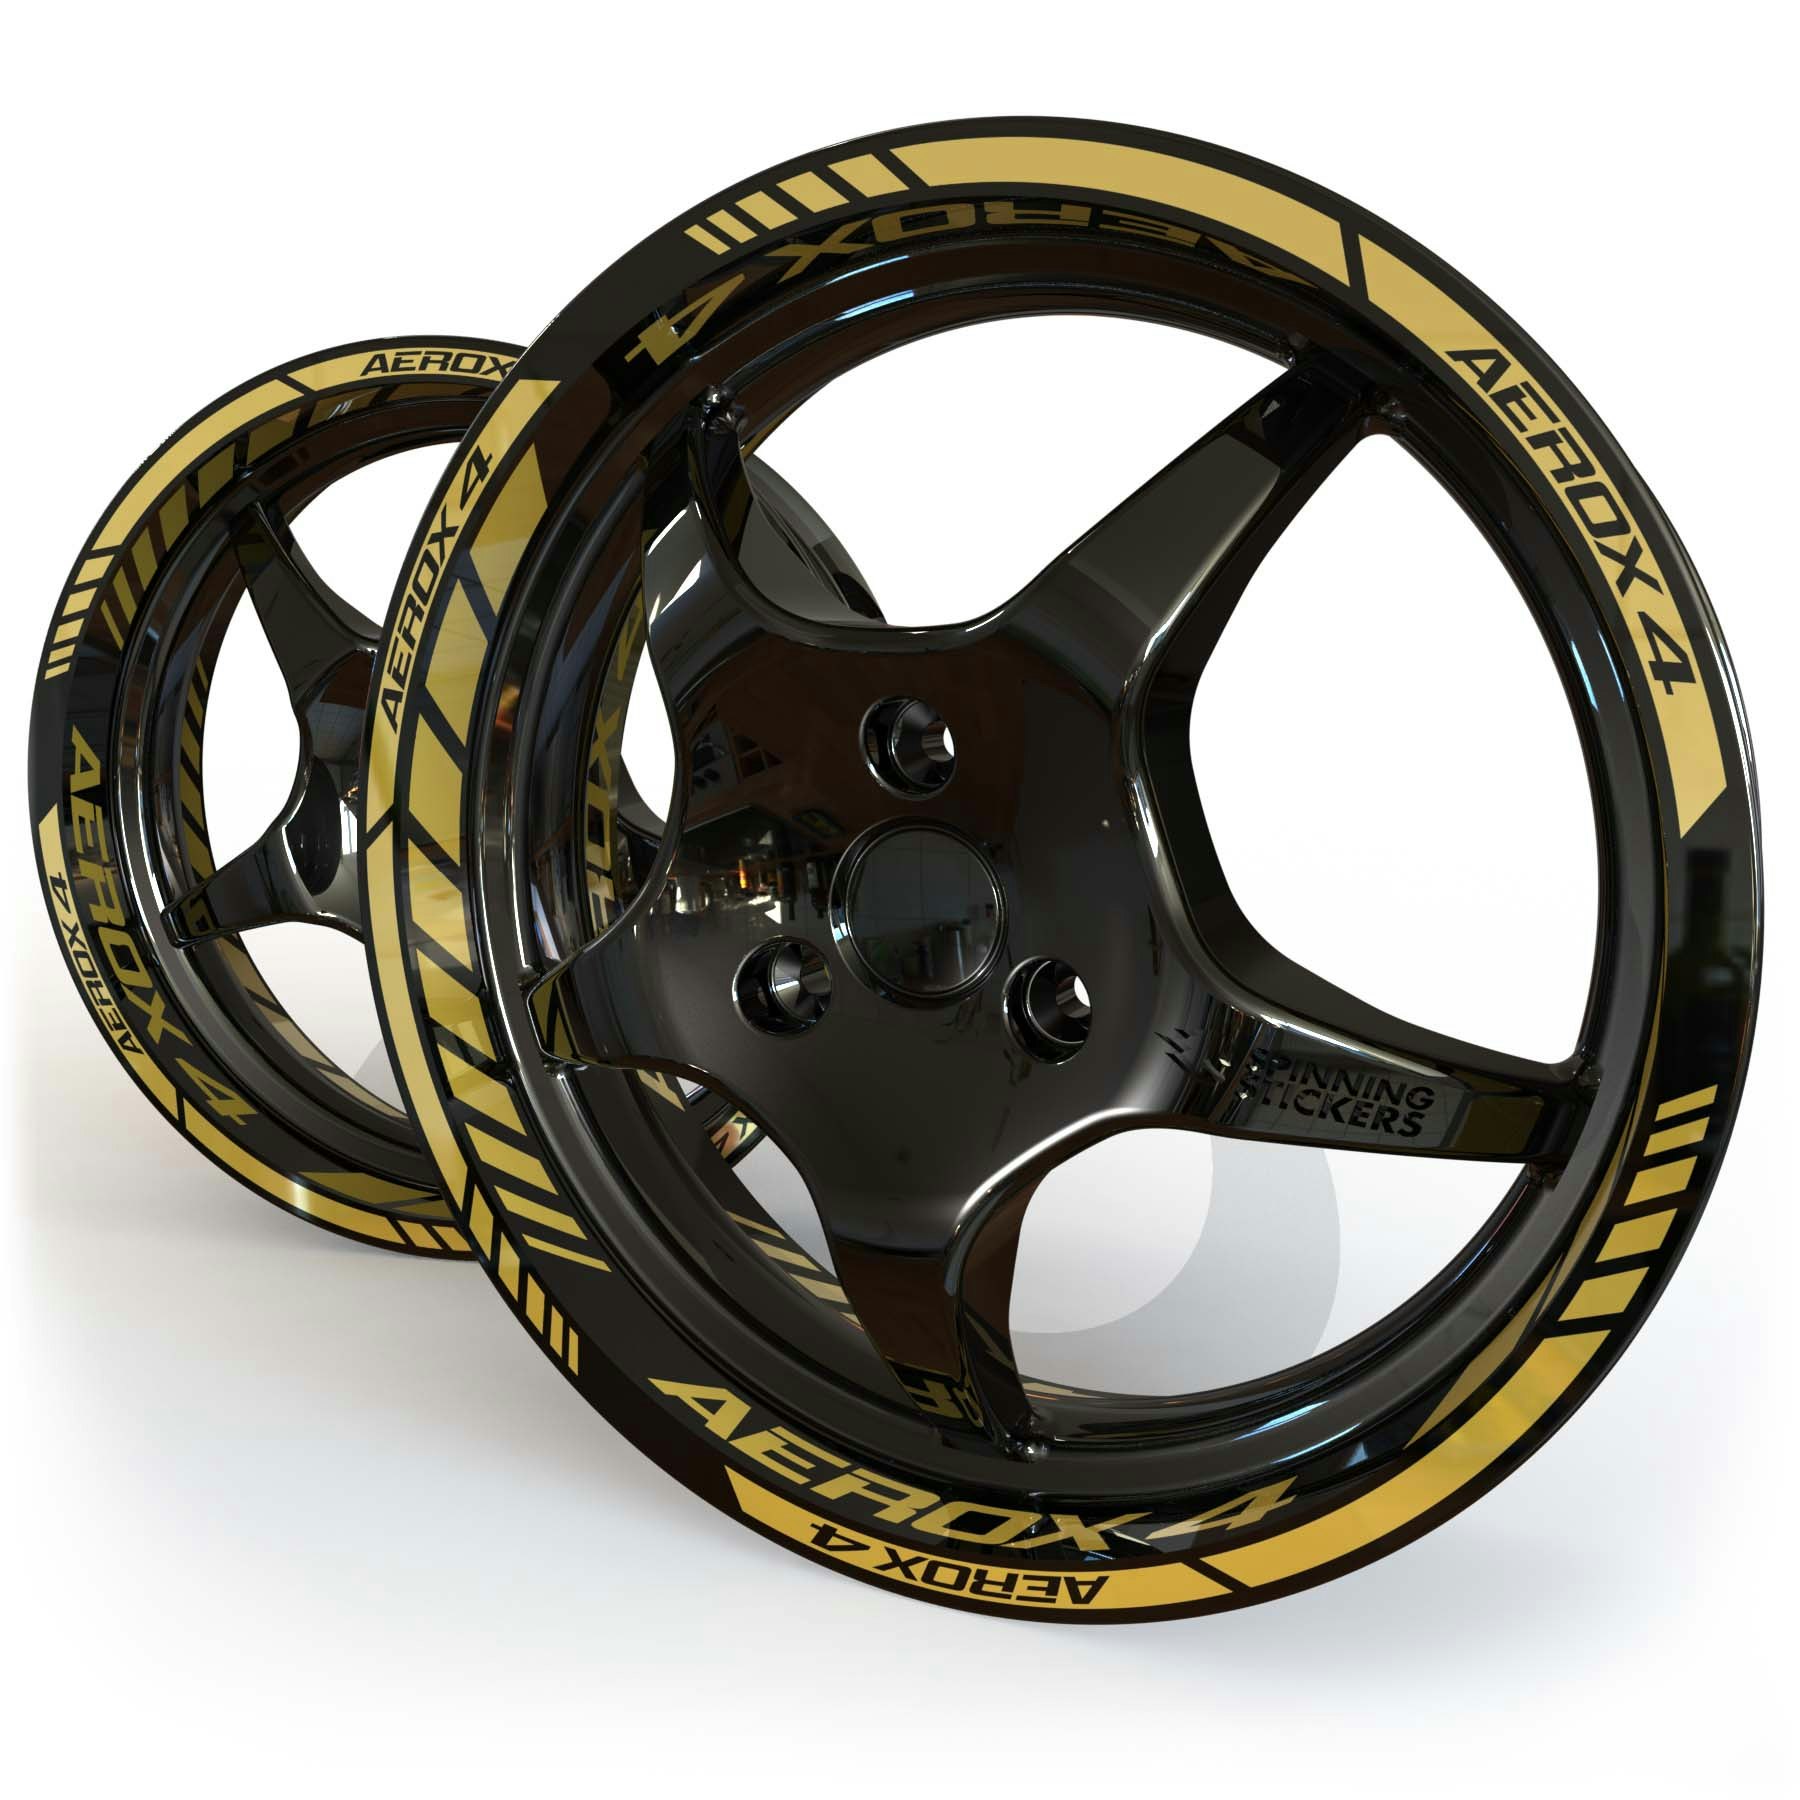 Metallic gold Yamaha Aerox 4 wheel stickers on a black 12 inch moped rim